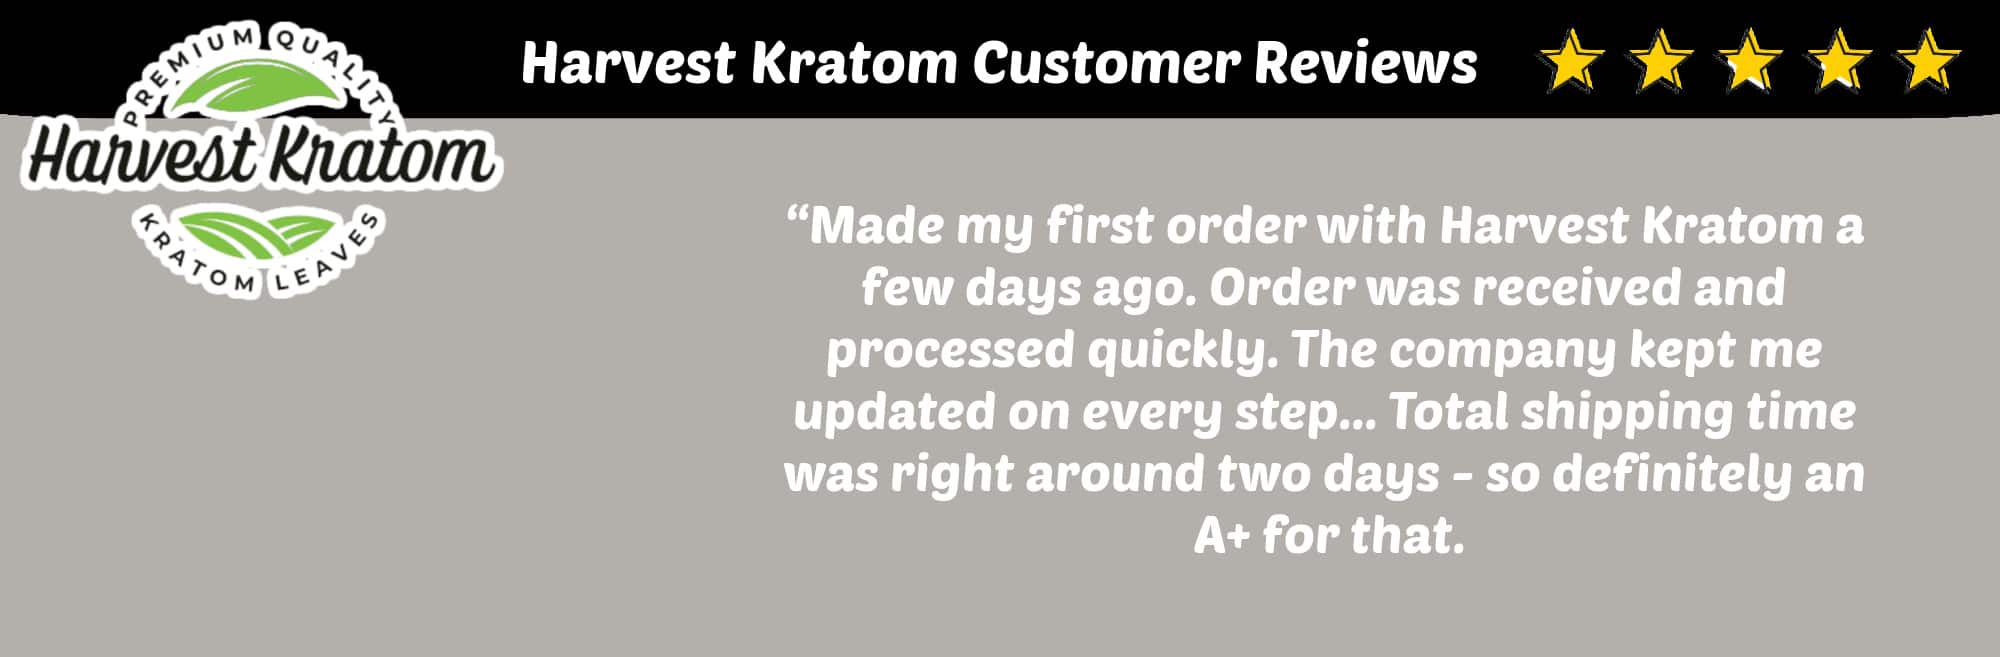 image of harvest kratom customer reviews